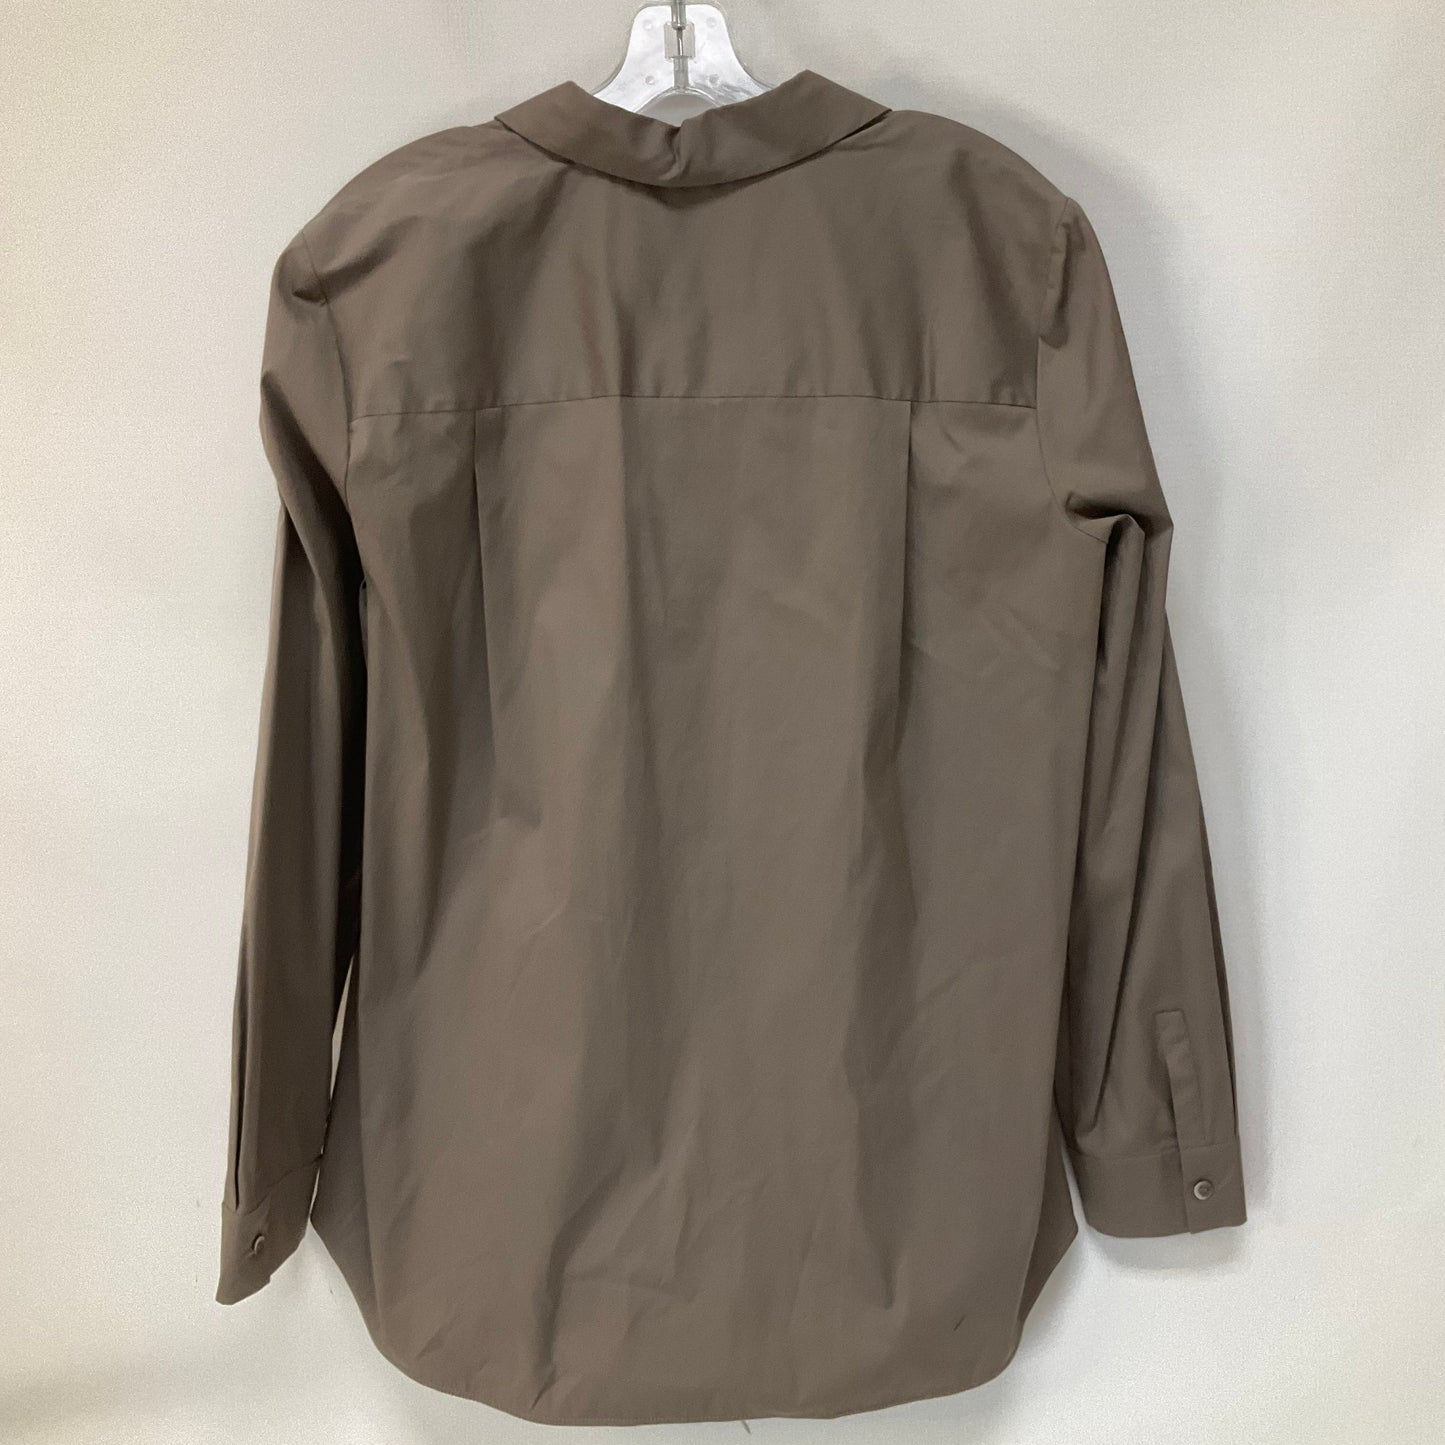 Grey Top Long Sleeve Lafayette 148, Size L